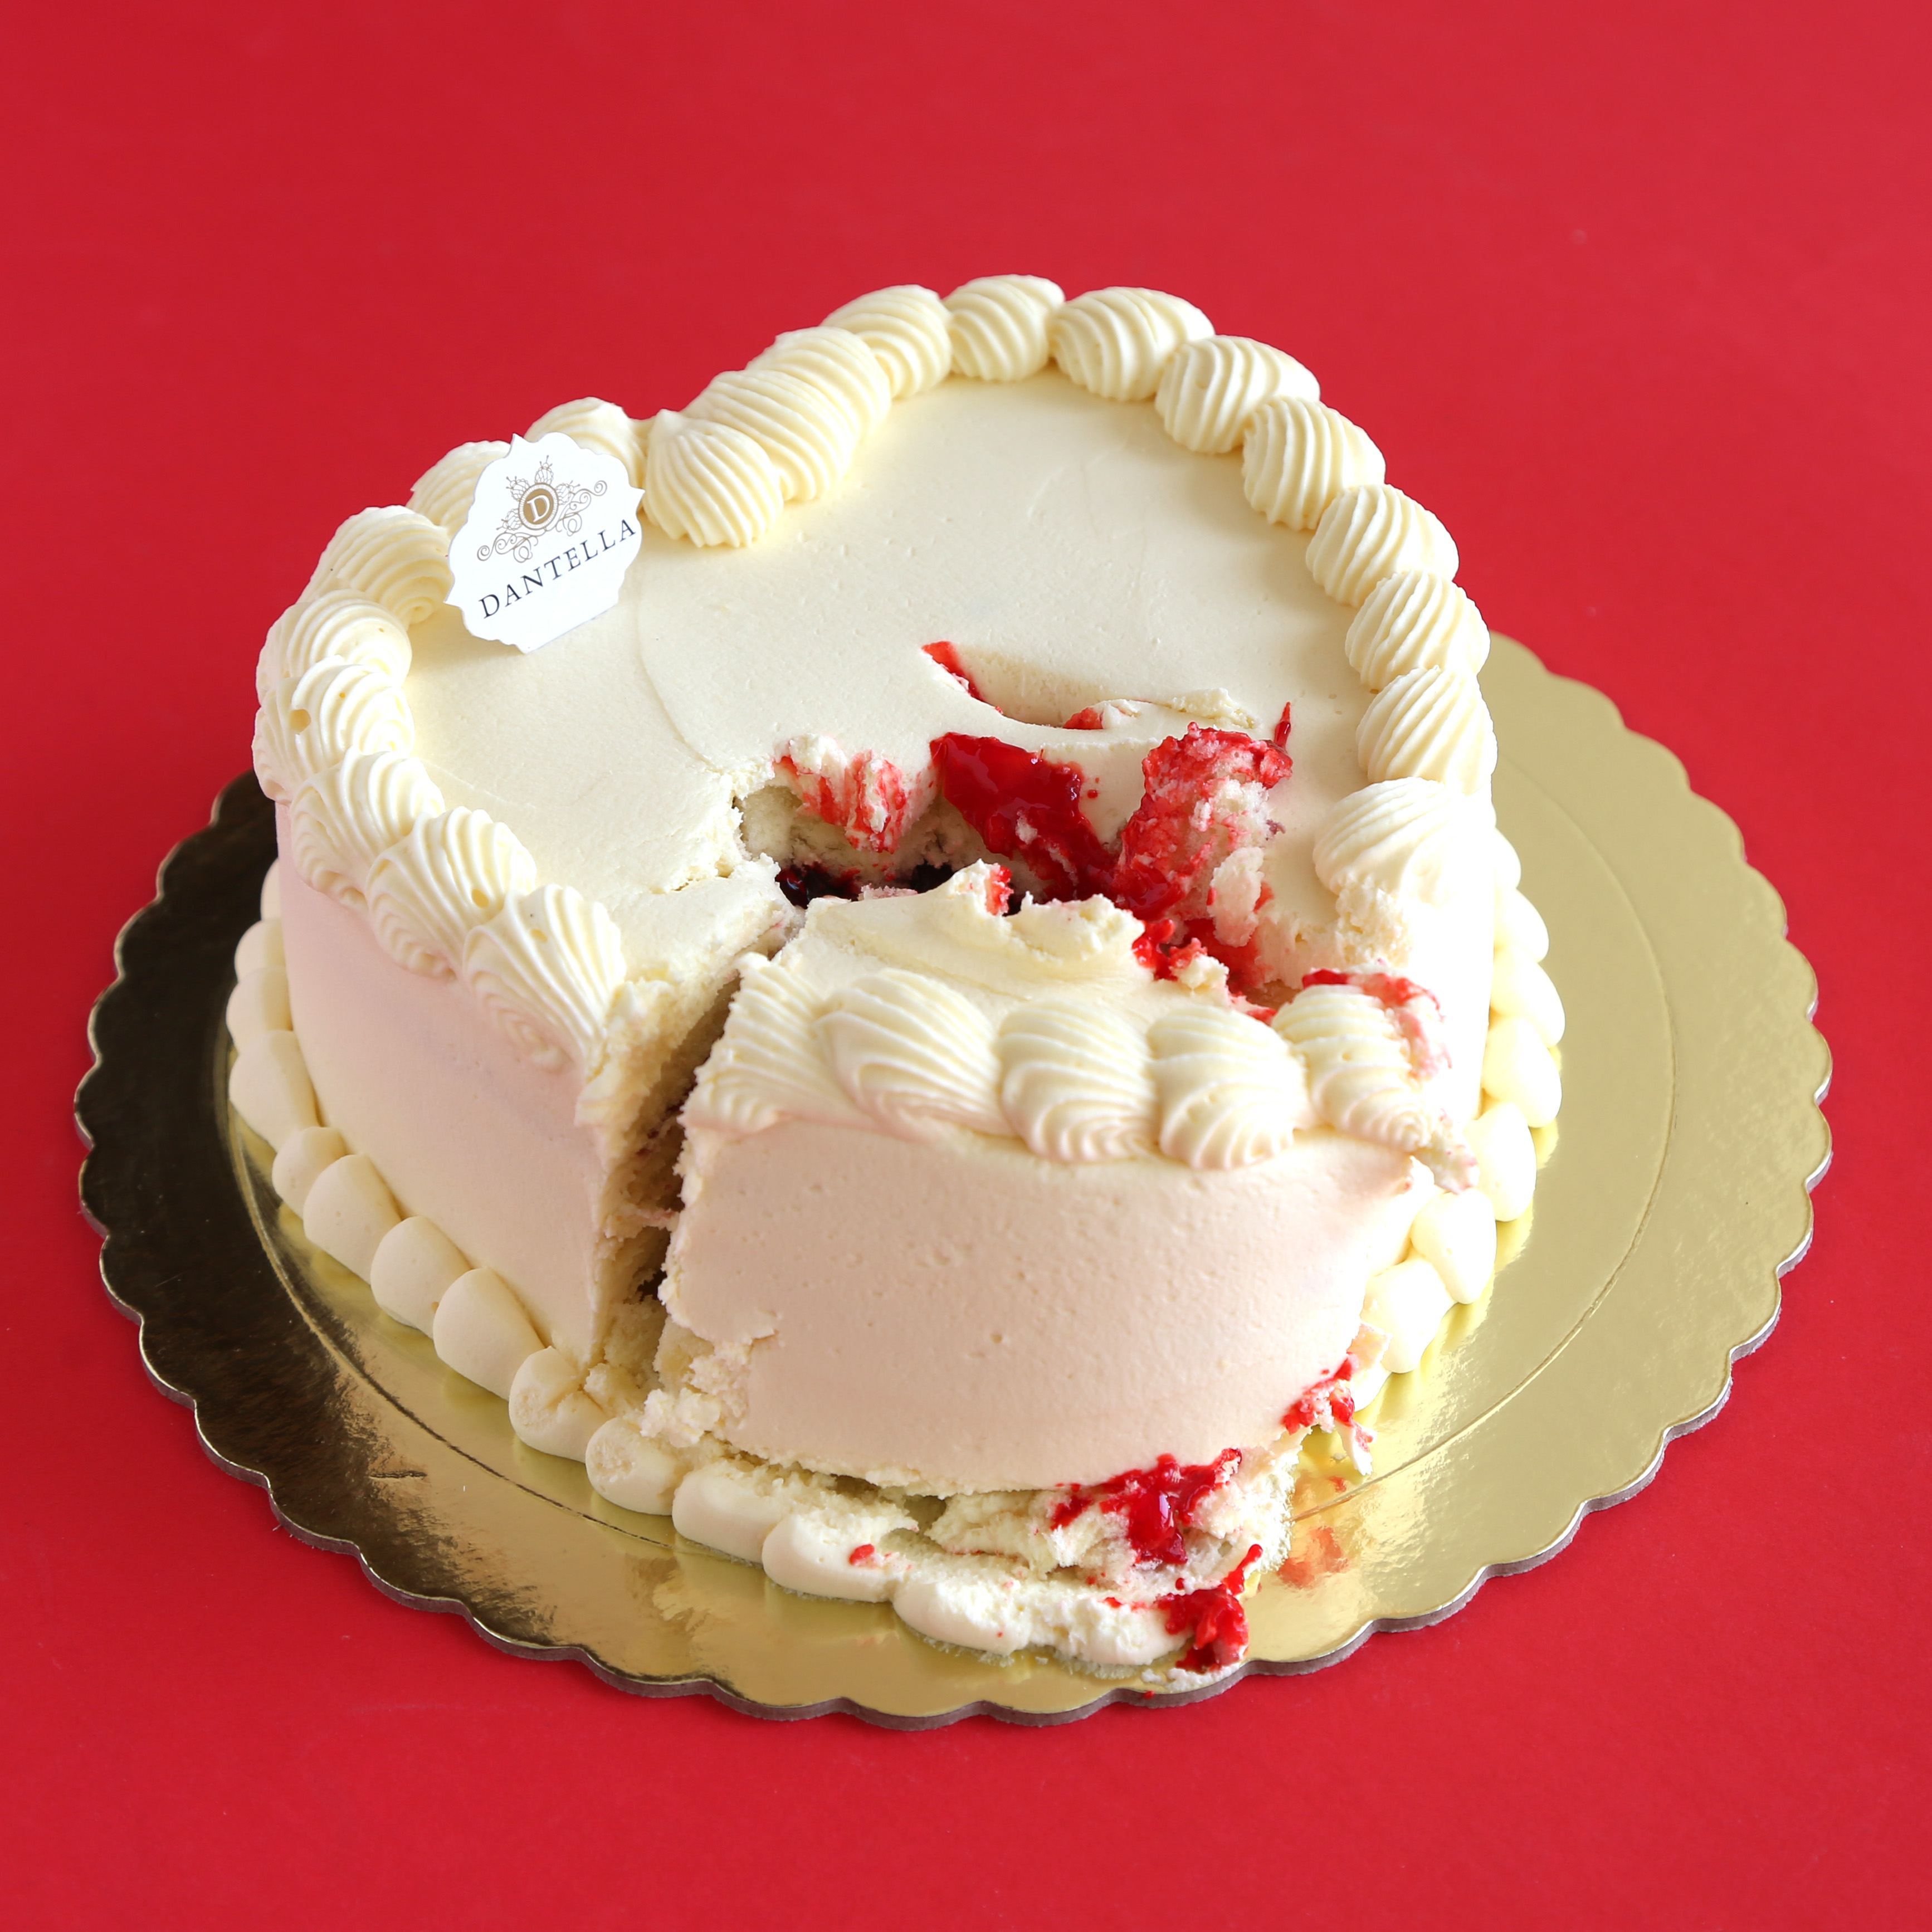 Breakup Cake Design Images (Breakup Birthday Cake Ideas) | Cool cake  designs, Breakup party, Cake